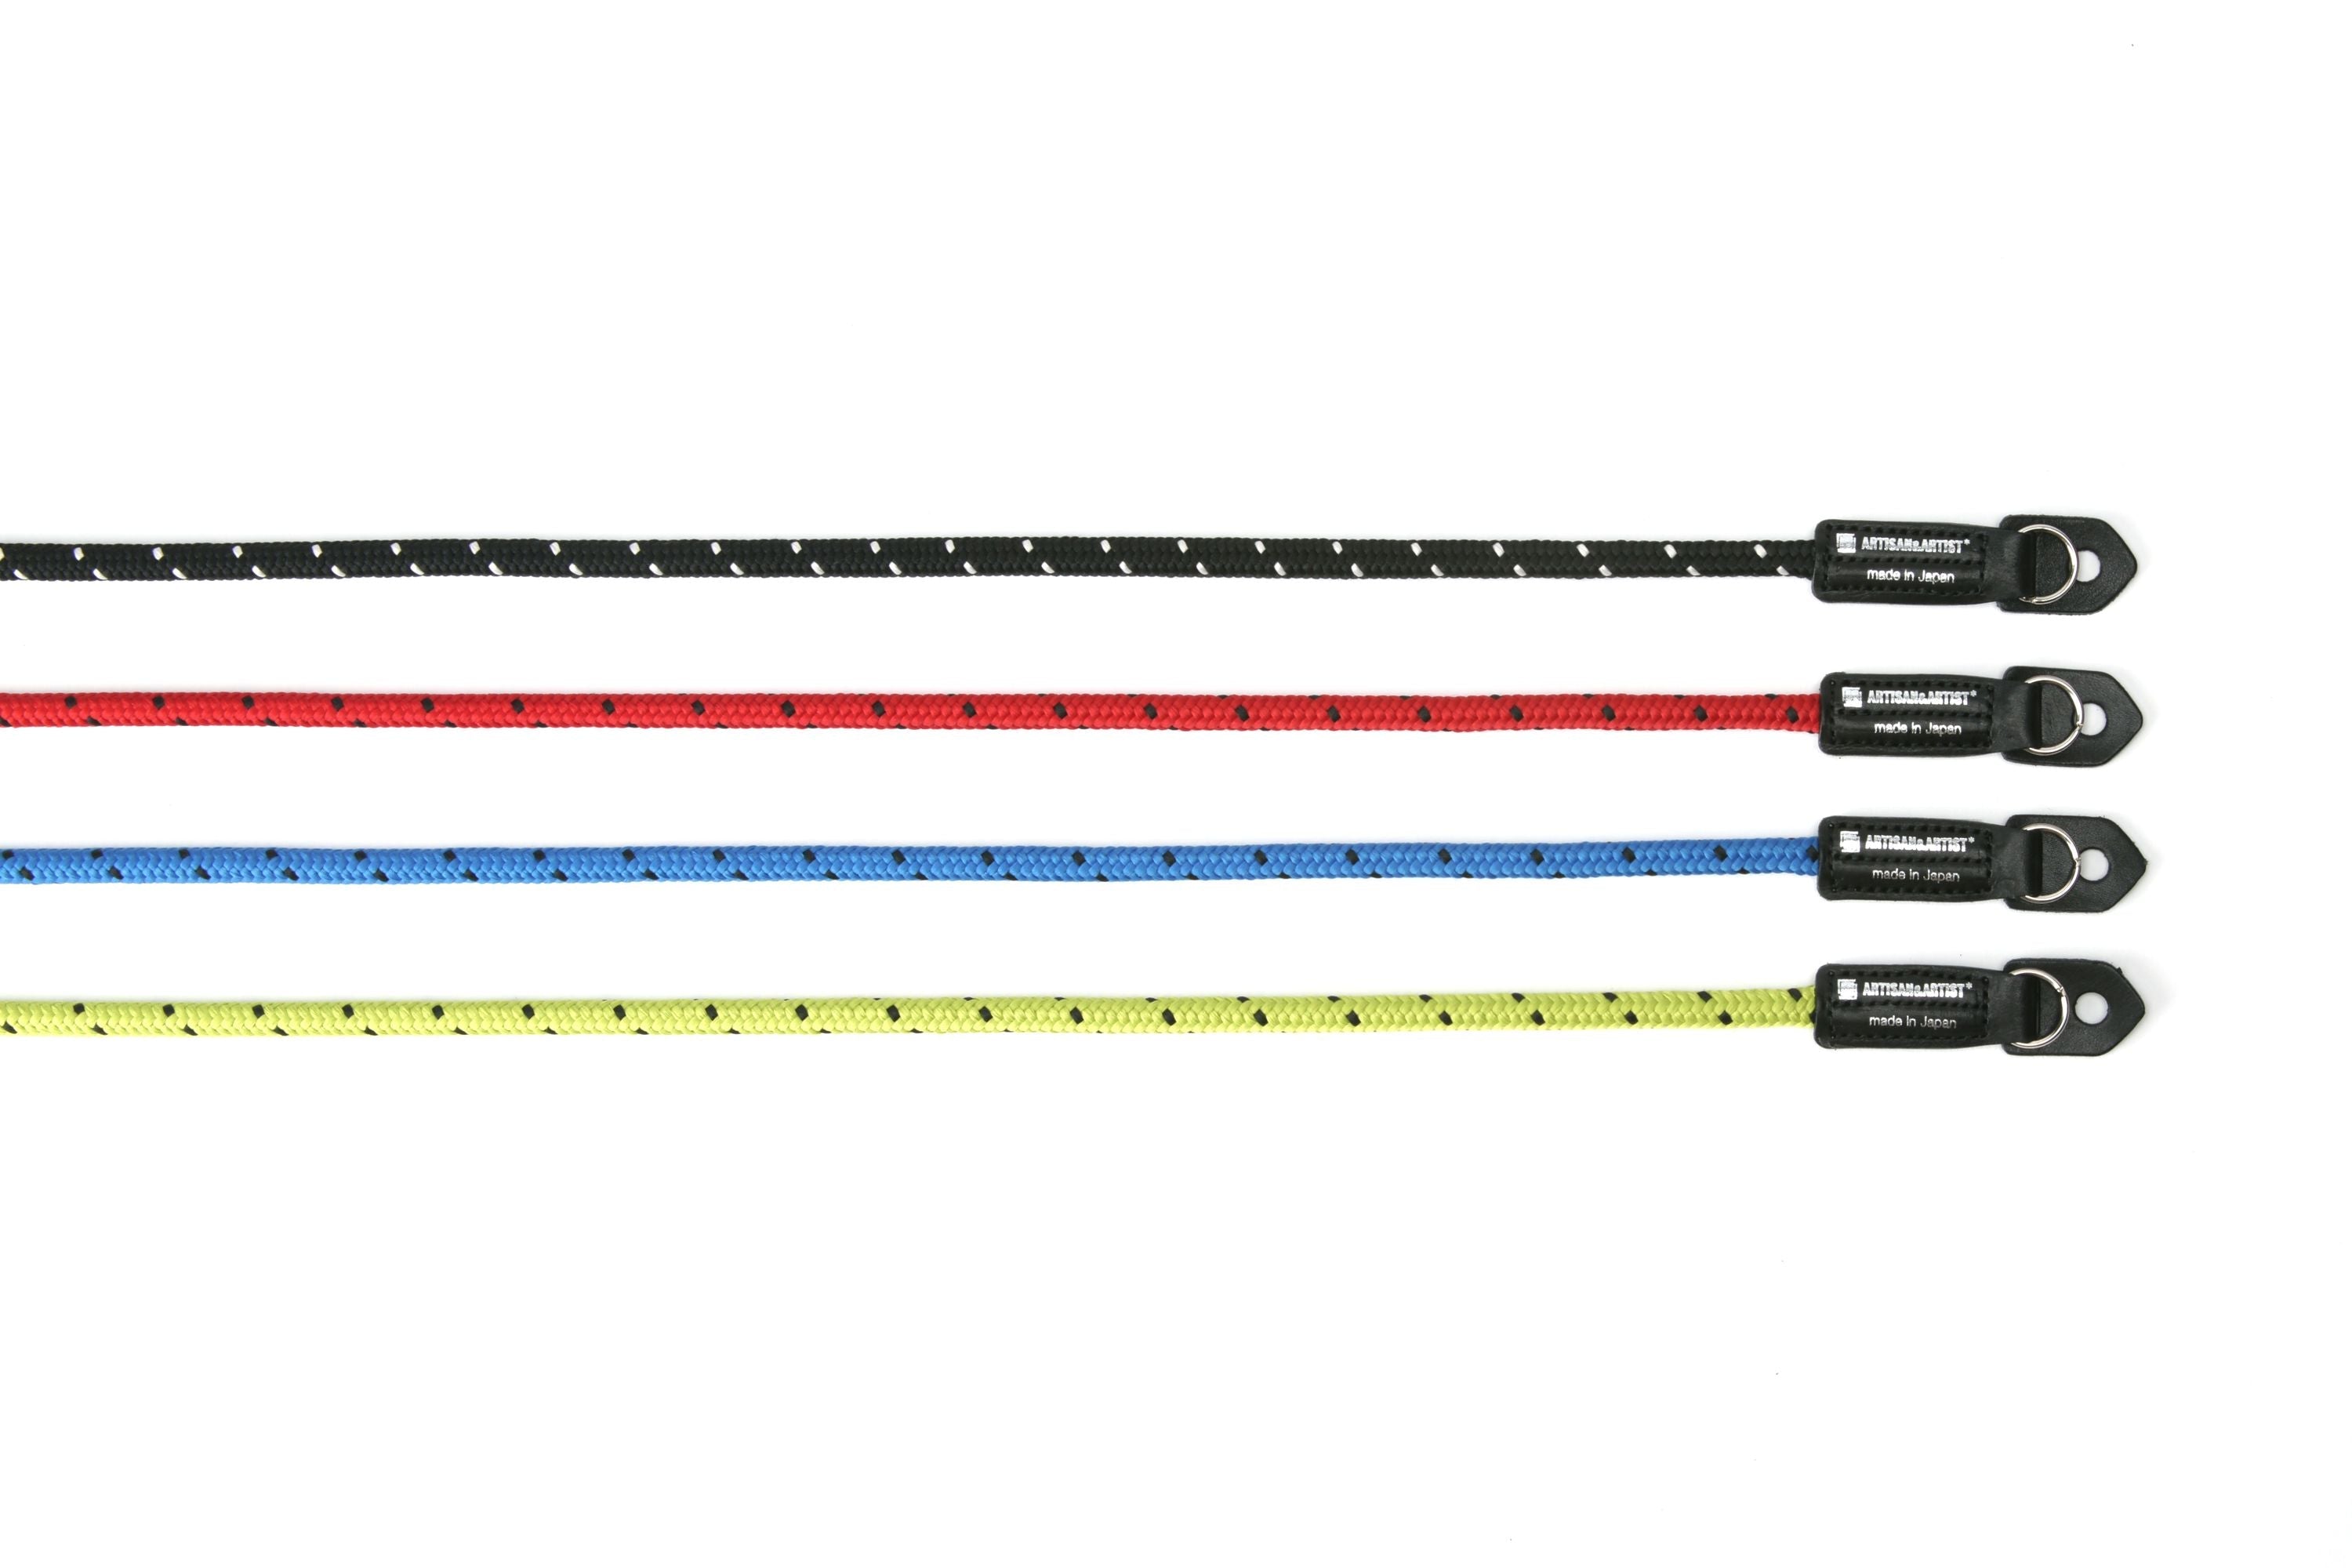 ACAM-706 Pindot Cord Strap (Longer Length)